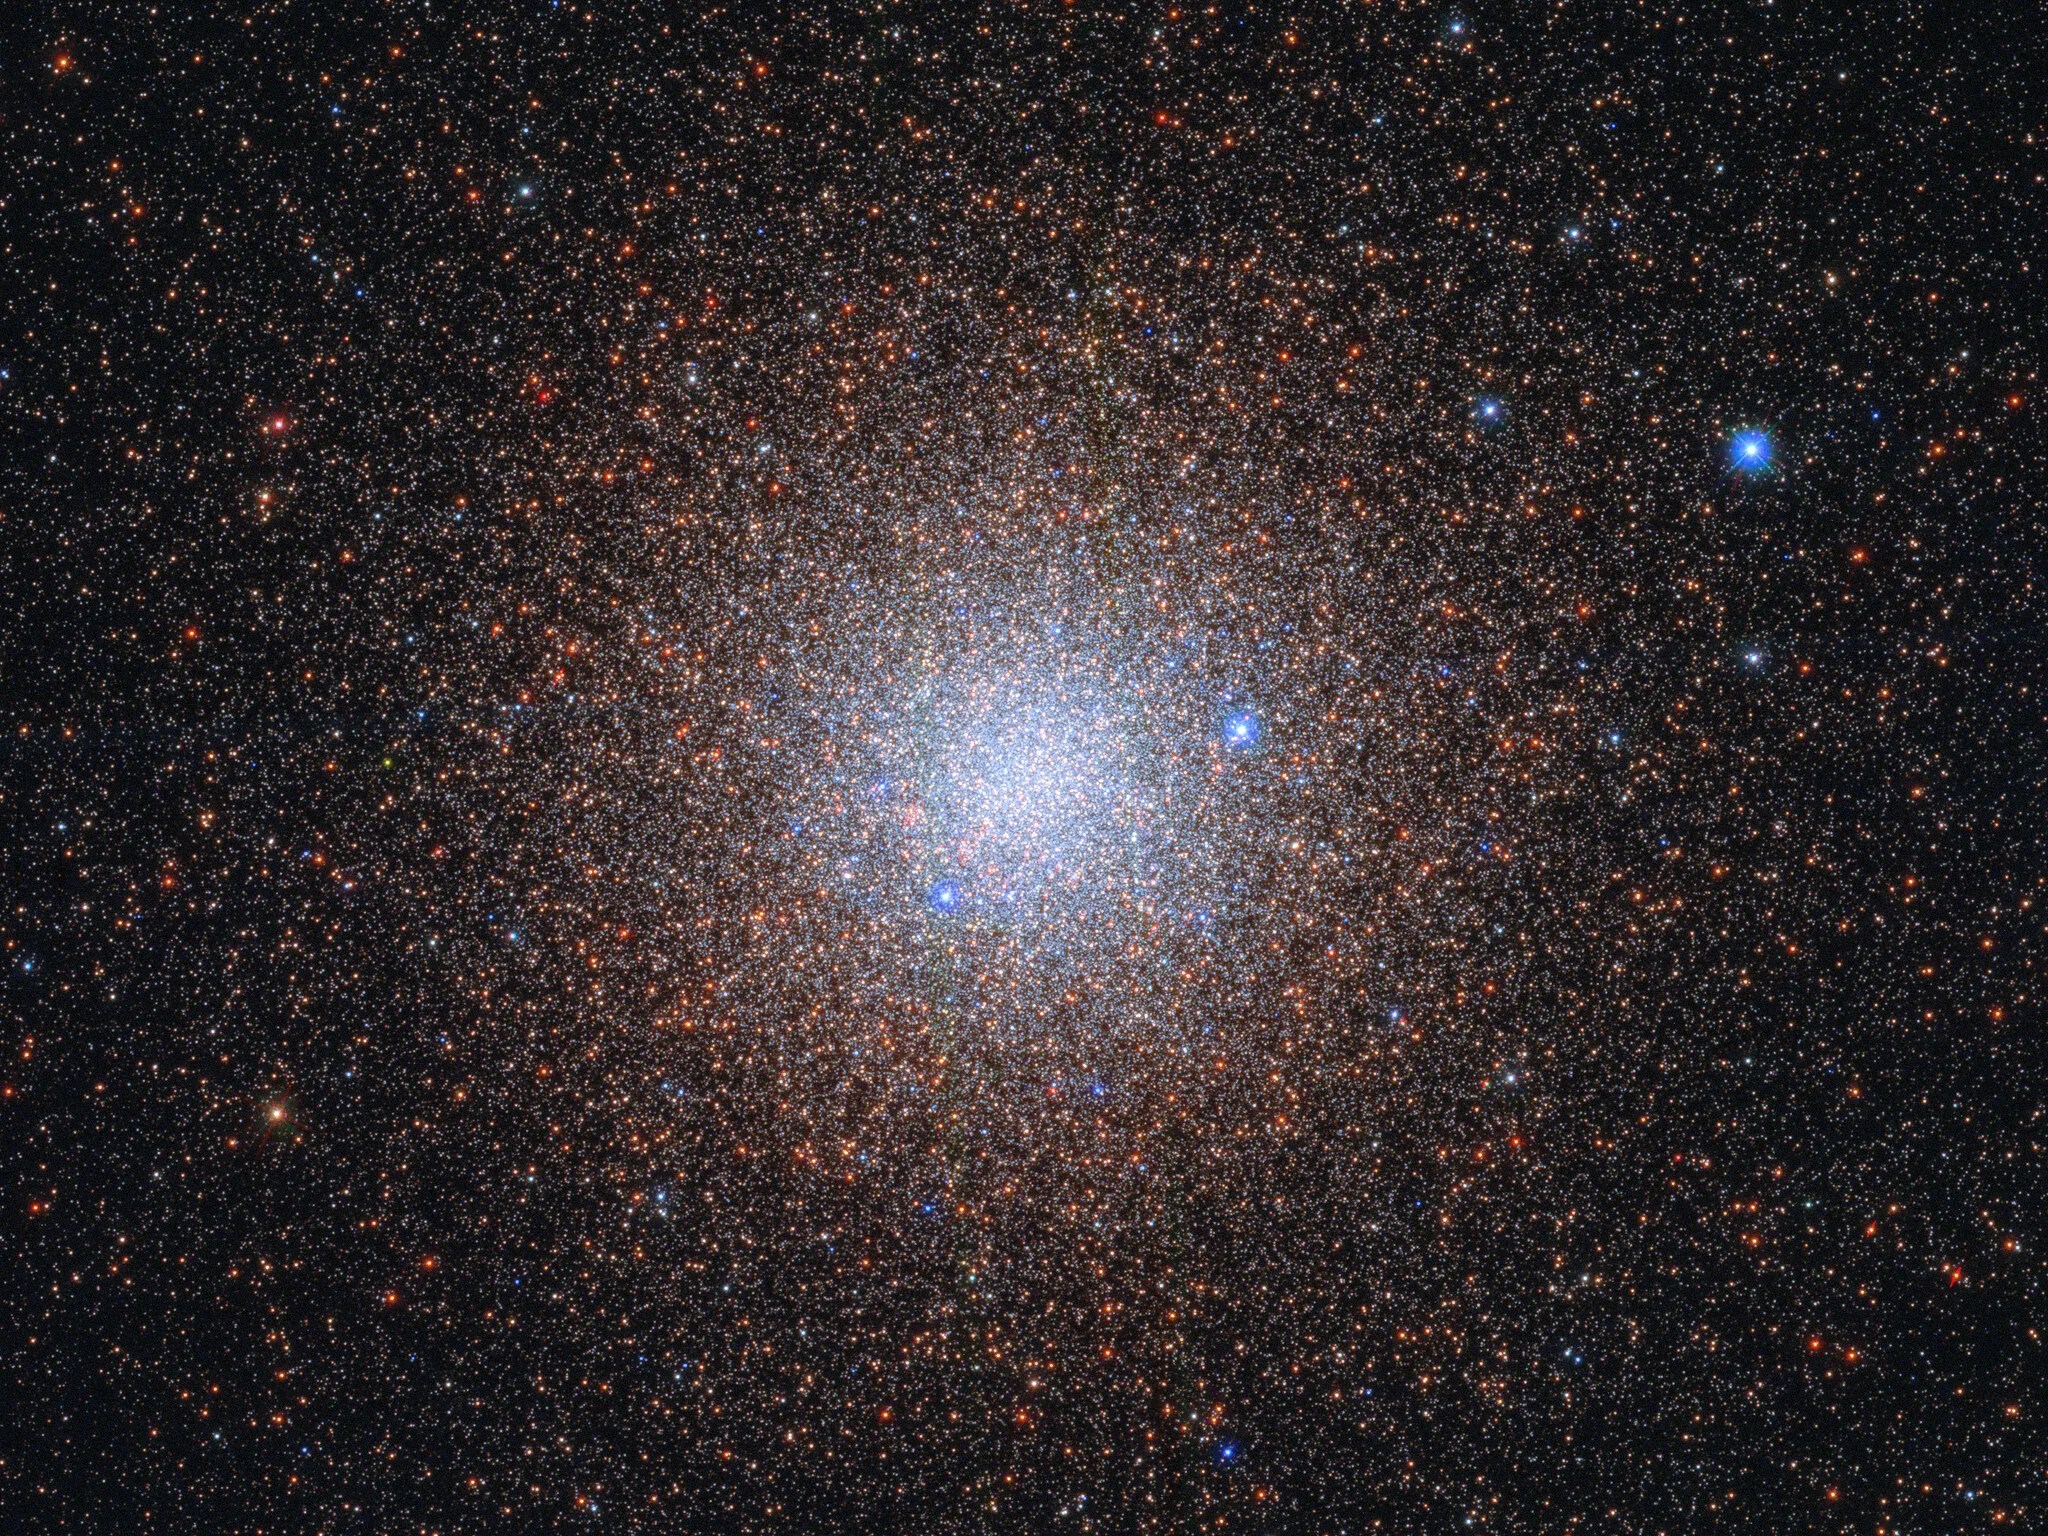 Globular cluster ngc 6441